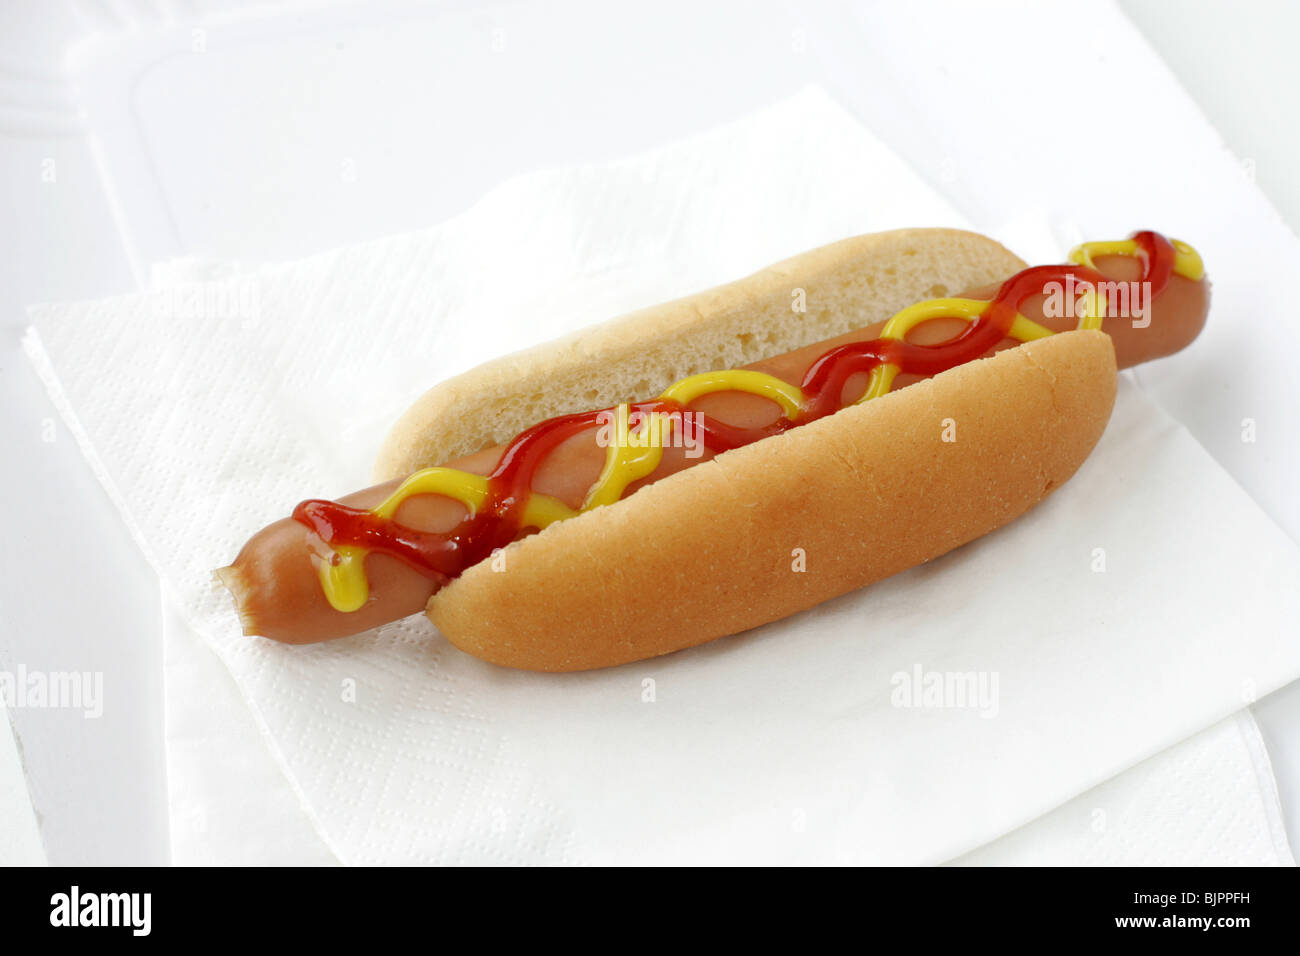 Hot dog on a napkin. Stock Photo